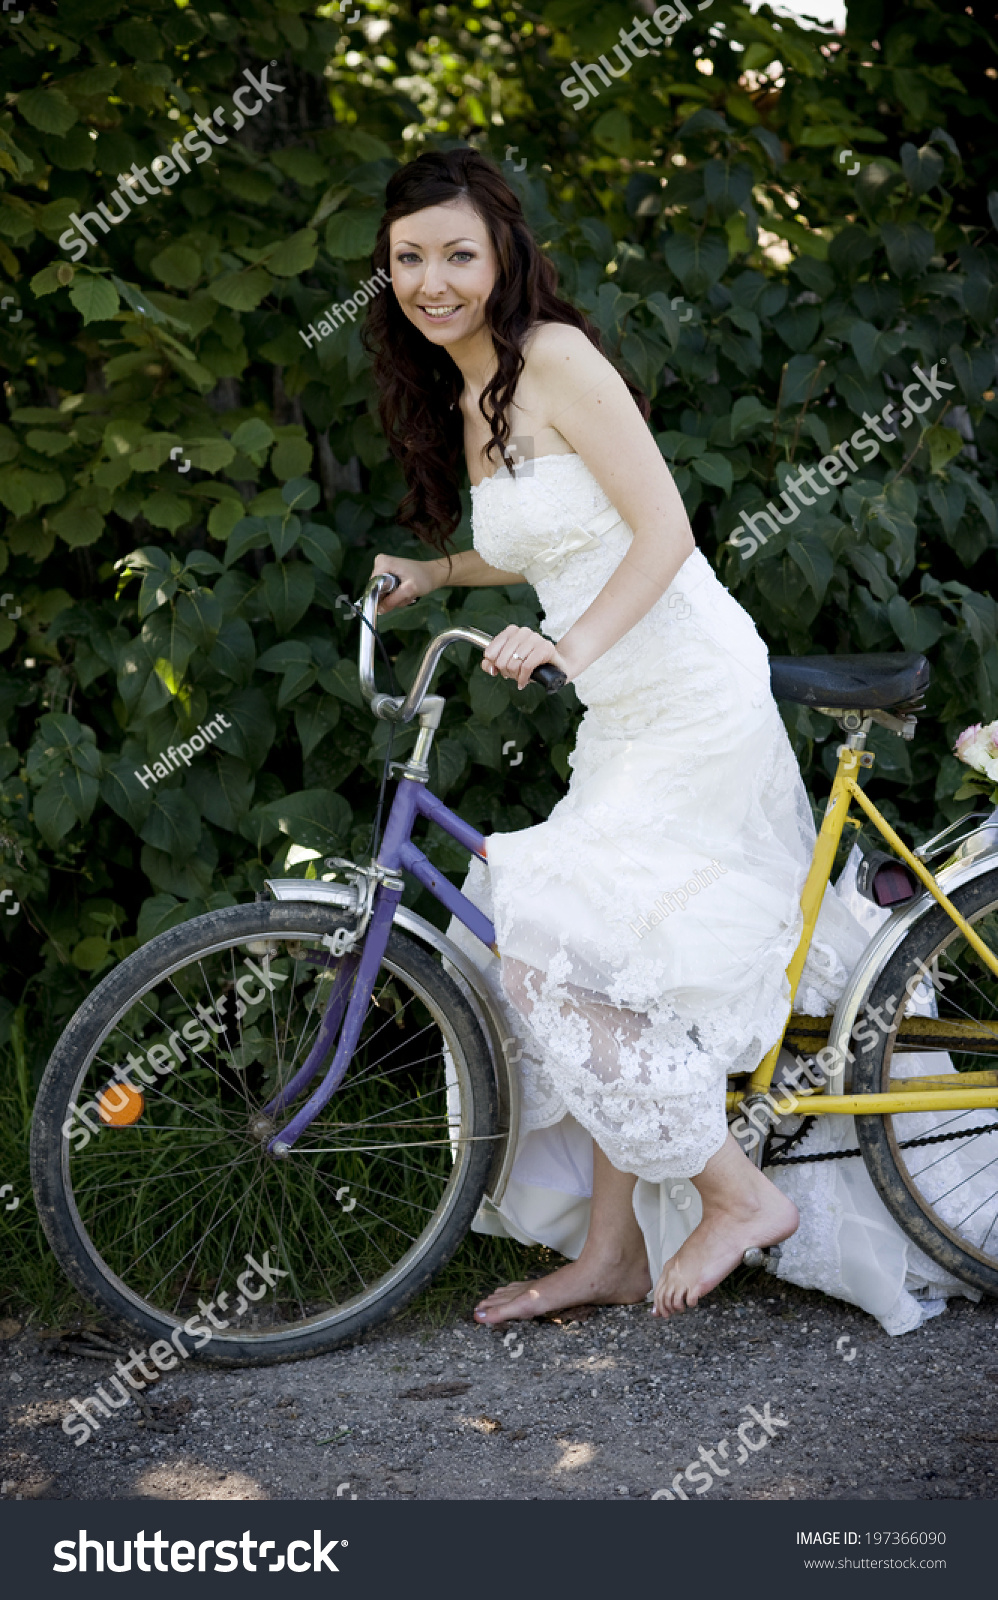 https://image.shutterstock.com/z/stock-photo-bride-in-white-wedding-dress-on-retro-bicycle-197366090.jpg